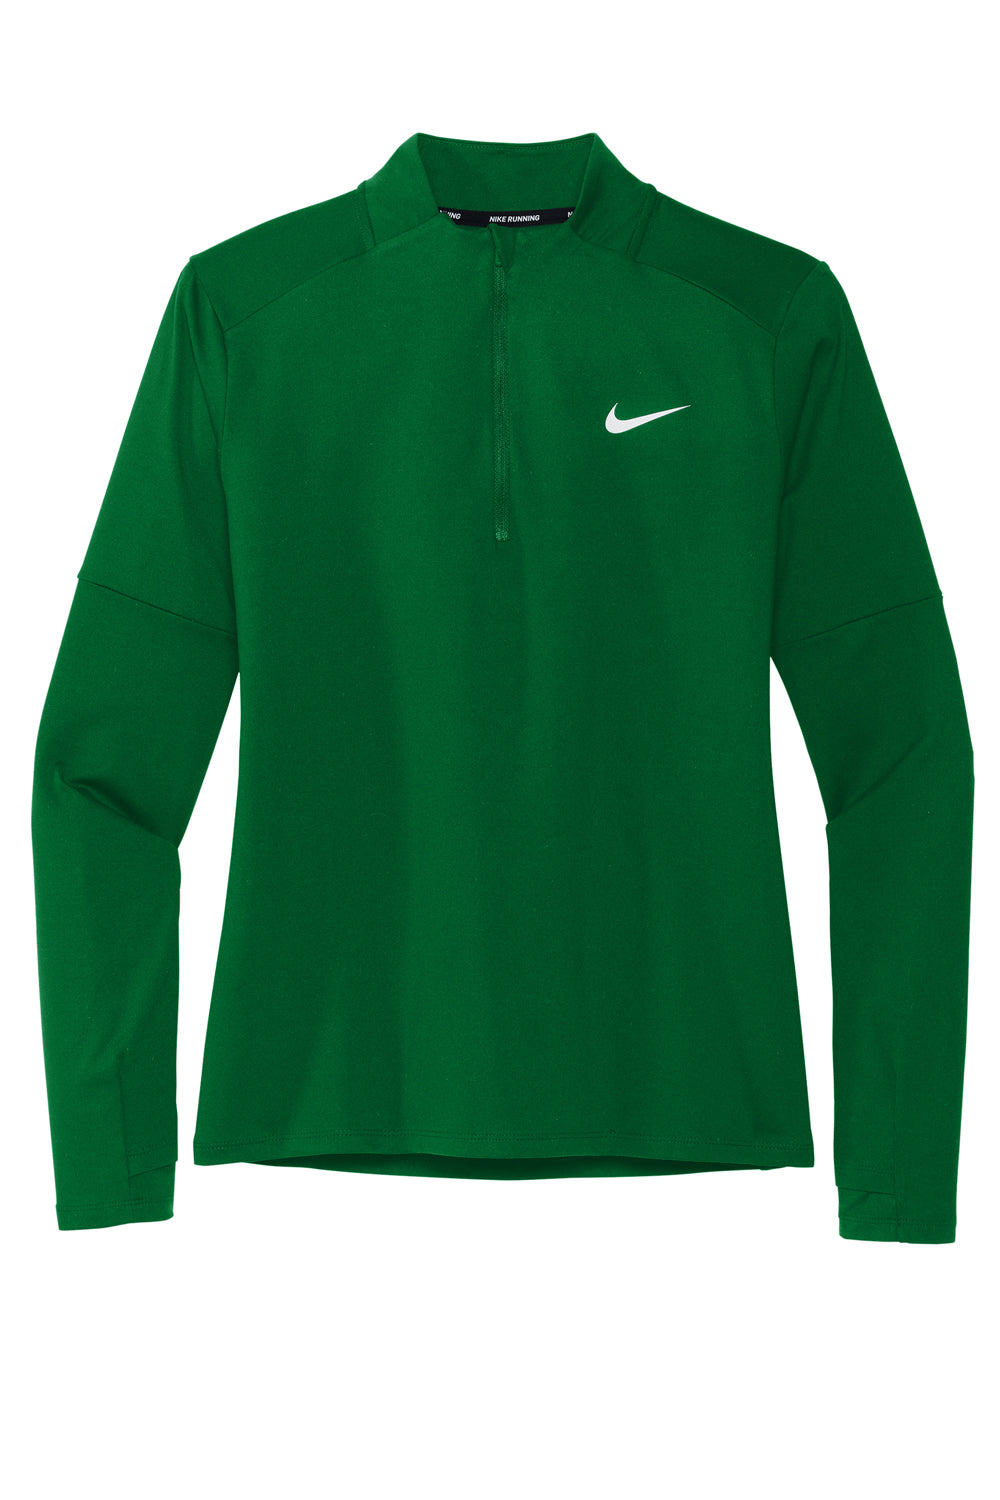 Nike NKDH4951 Womens Element Dri-Fit Moisture Wicking 1/4 Zip Sweatshirt Dark Green Flat Front